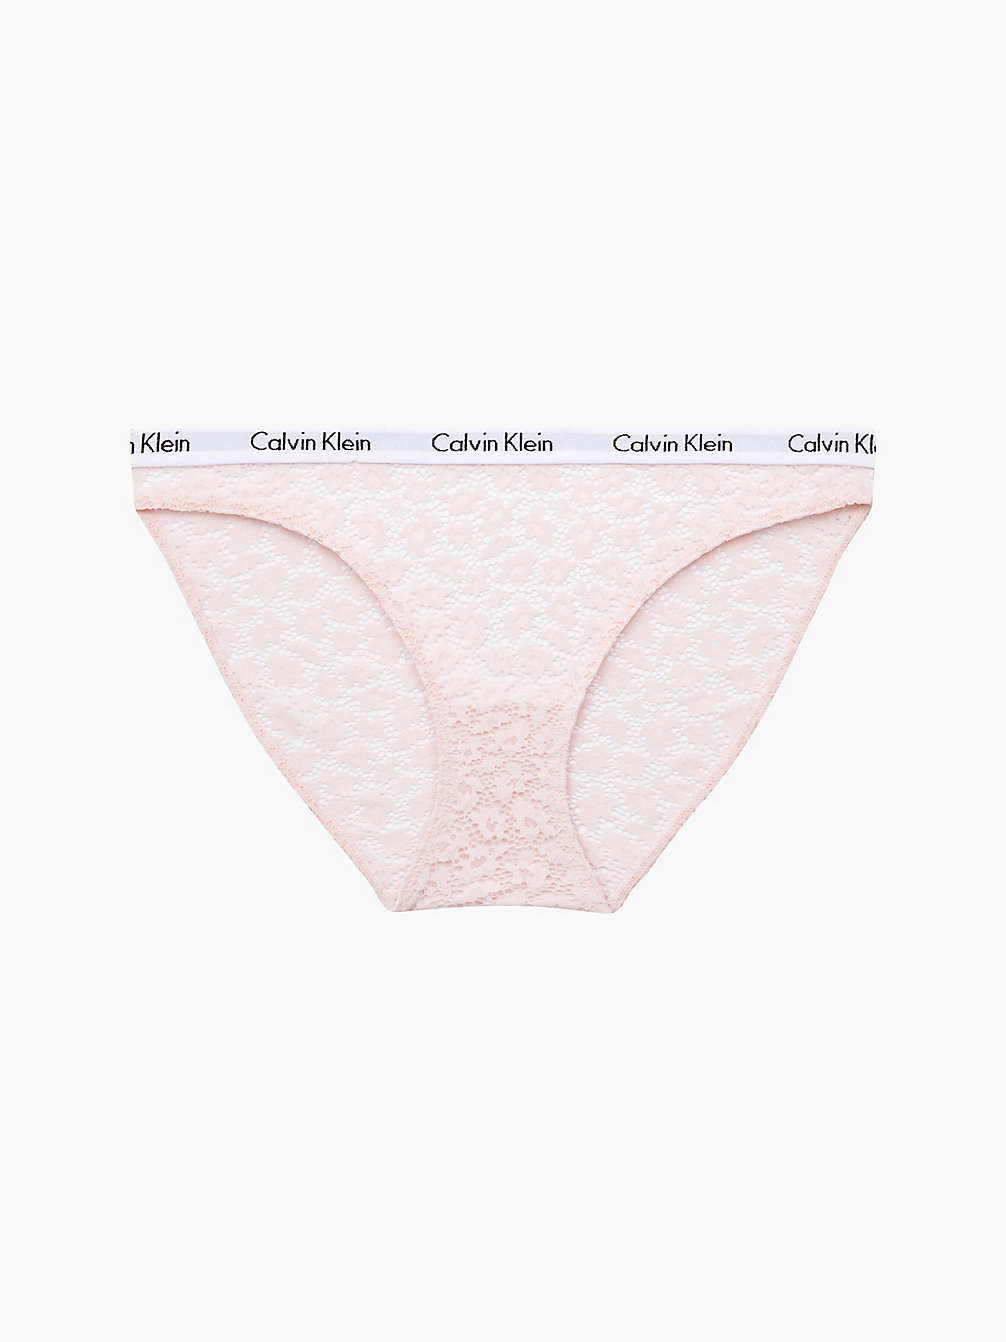 NYMPHS THIGH Bikini Briefs - Carousel undefined women Calvin Klein